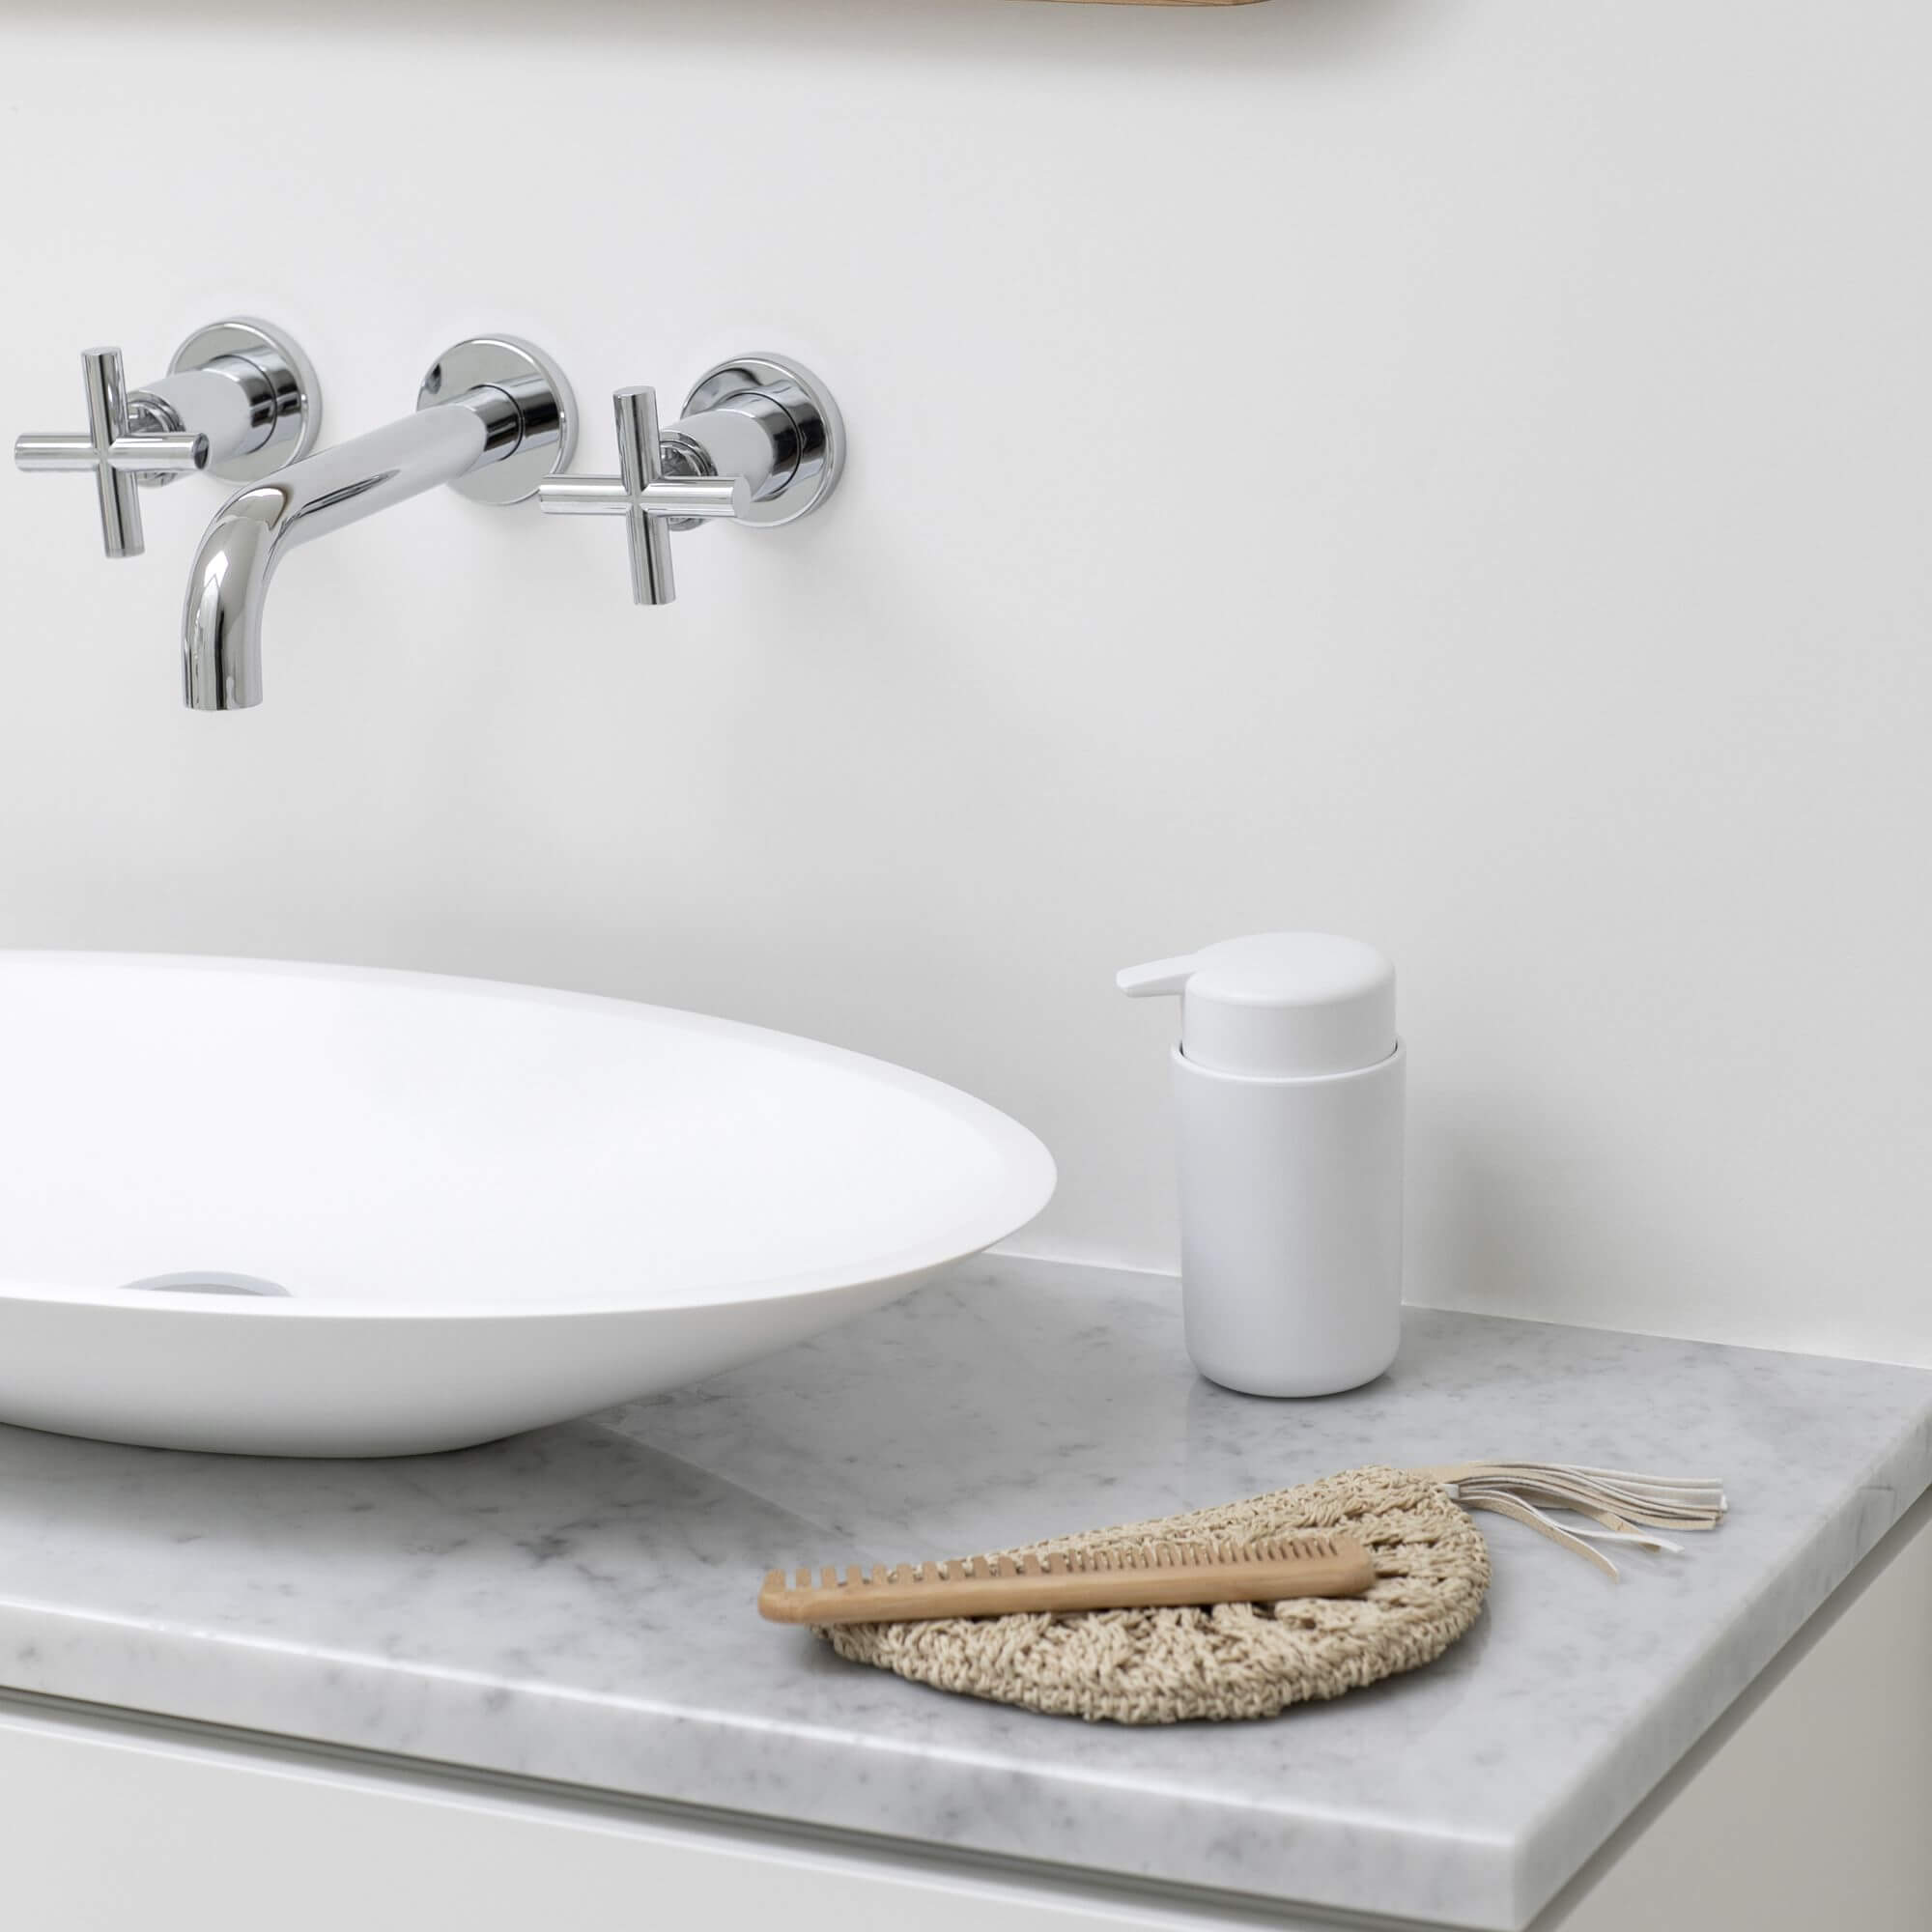 White Brabantia soap dispenser next to a sink on a bathroom vanity